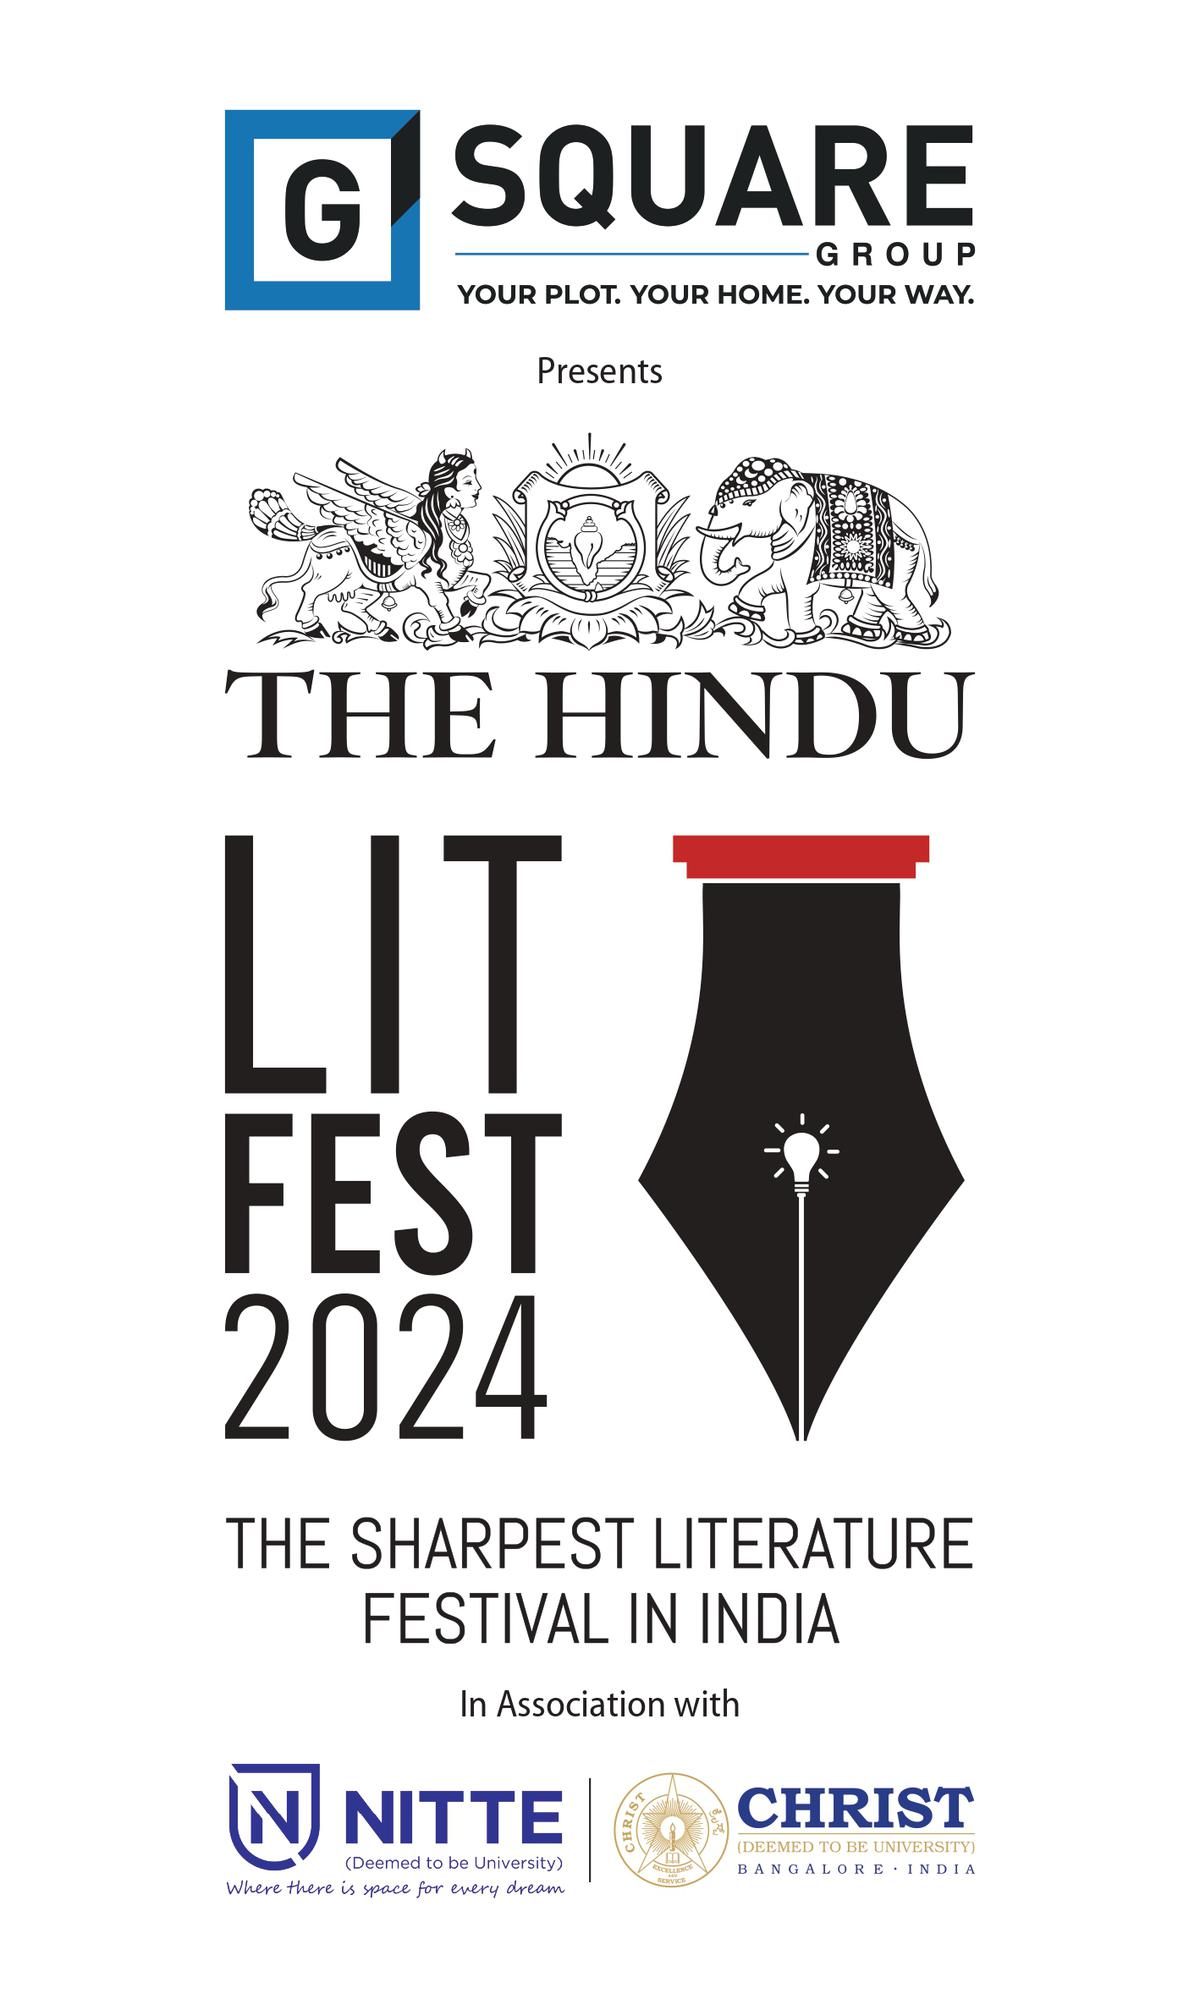 The Hindu Editorial | 100% Best The Hindu Editorial Analysis